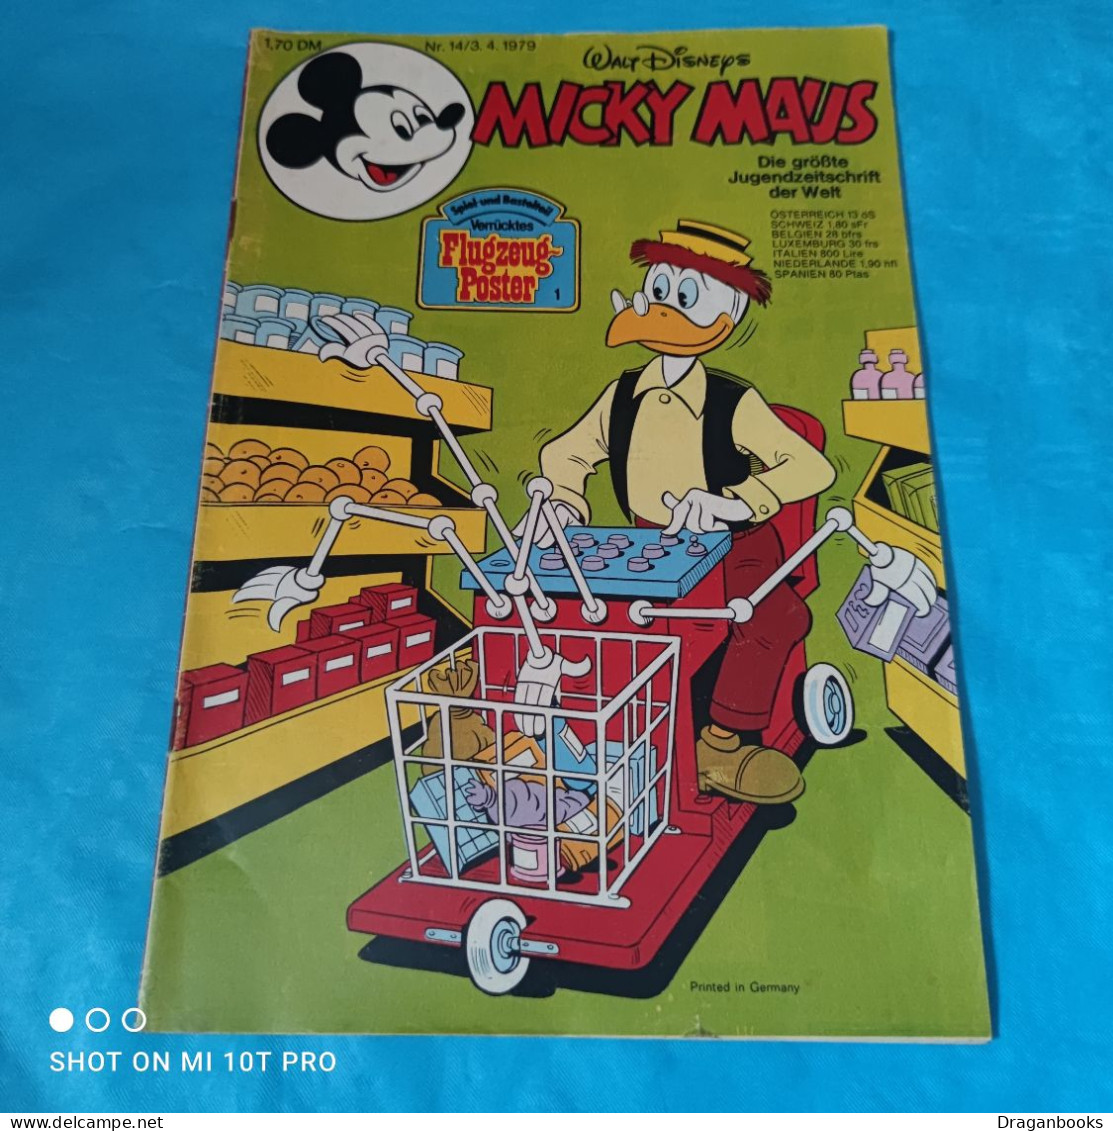 Micky Maus Nr. 14 - 3.4.1979 - Walt Disney